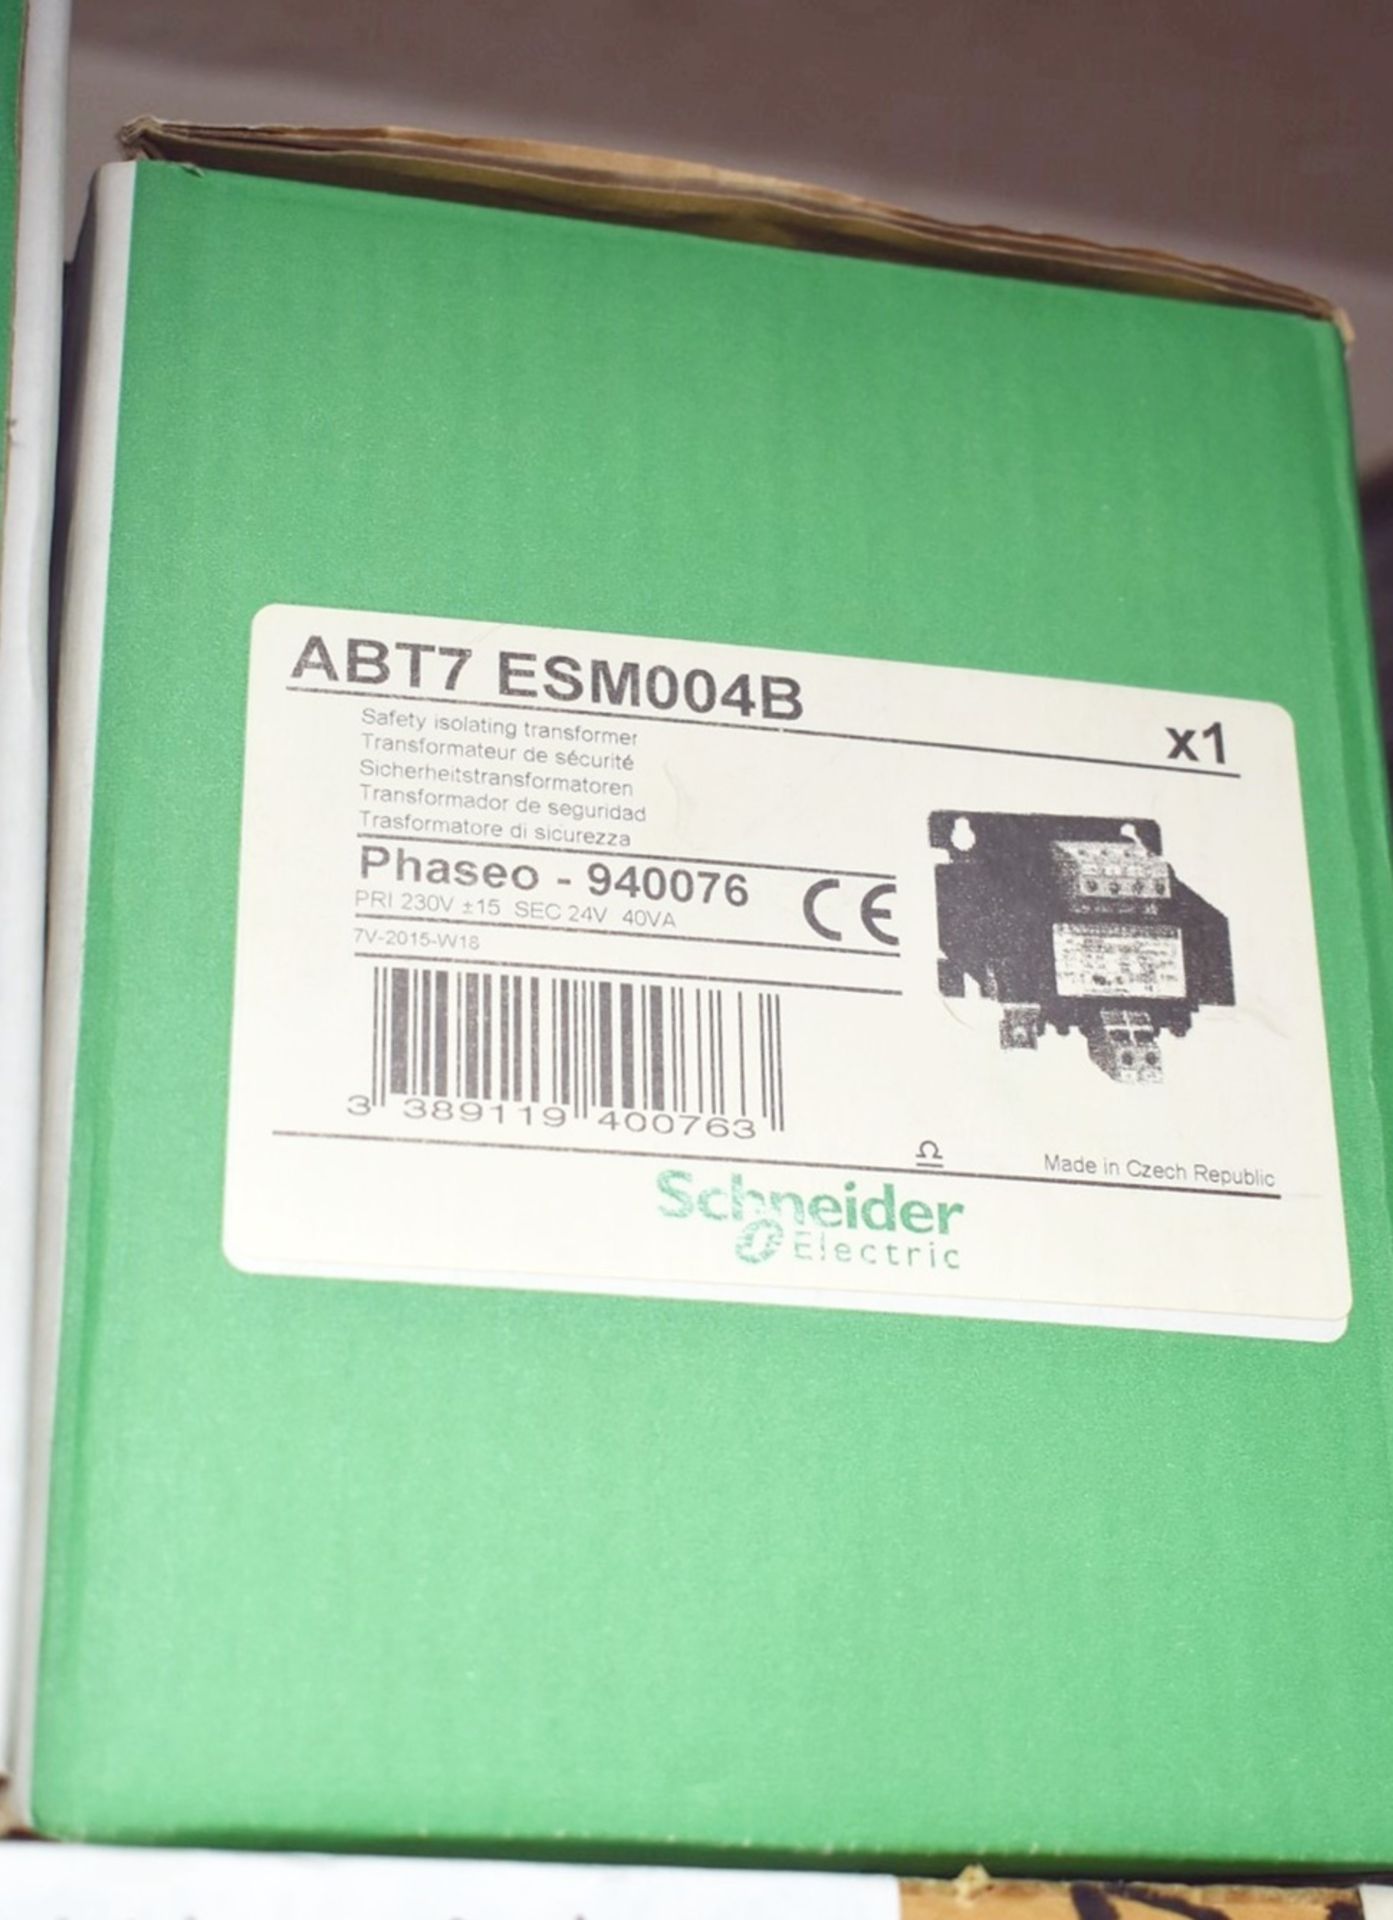 1 x Schneider ABT7 ESM004B Voltage Transformer - Unused Boxed Stock - Ref: TBC - CL816 - Location: B